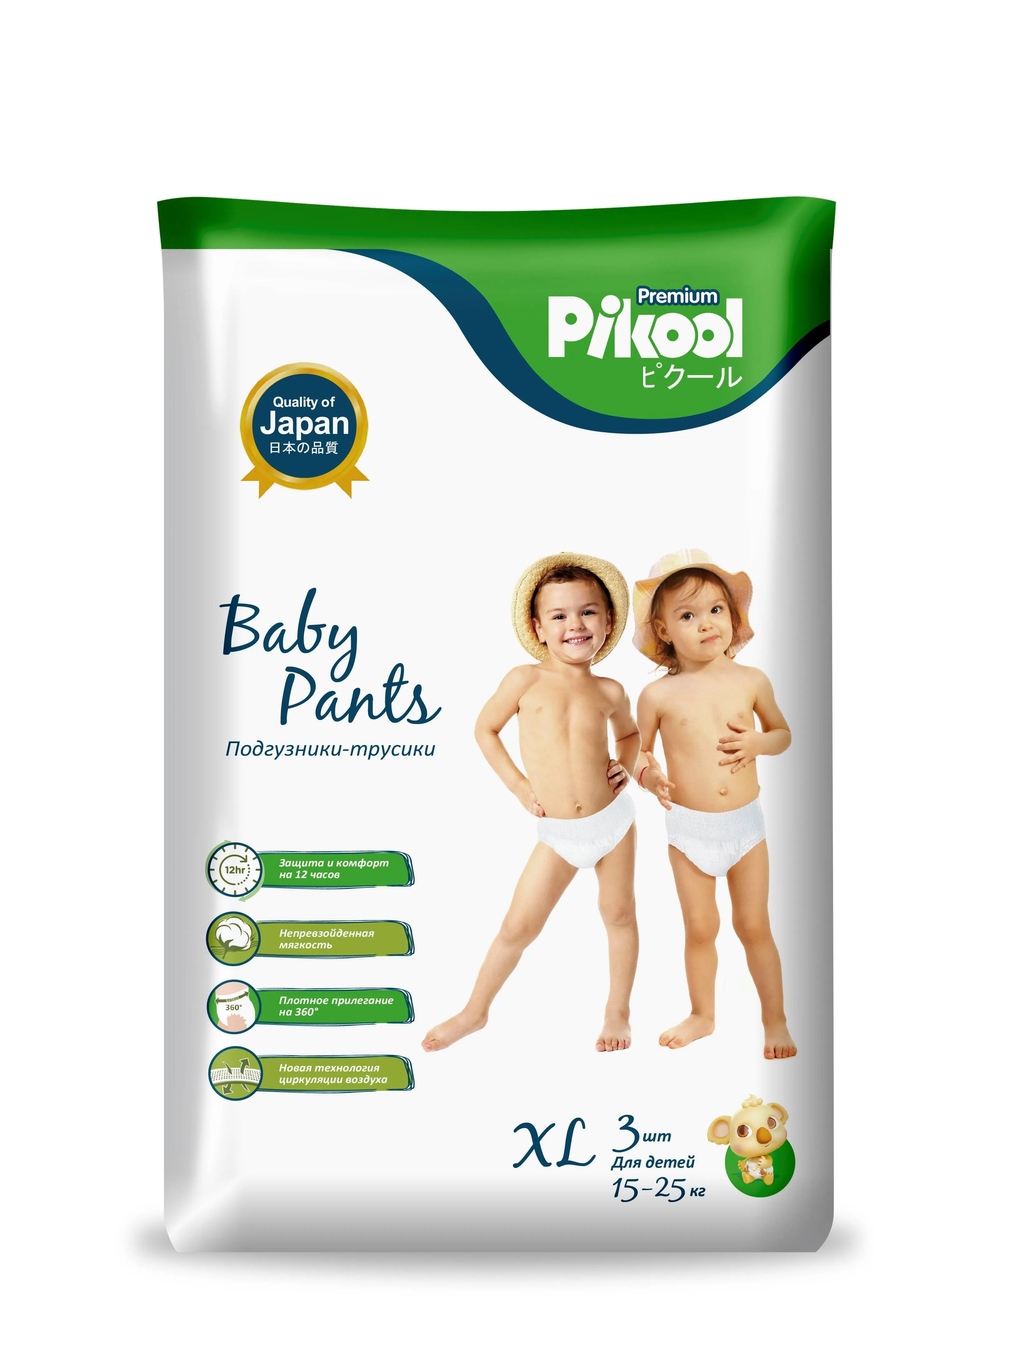 Pikool Premium Подгузники-трусики детские, XL, 15-25кг, 3 шт.